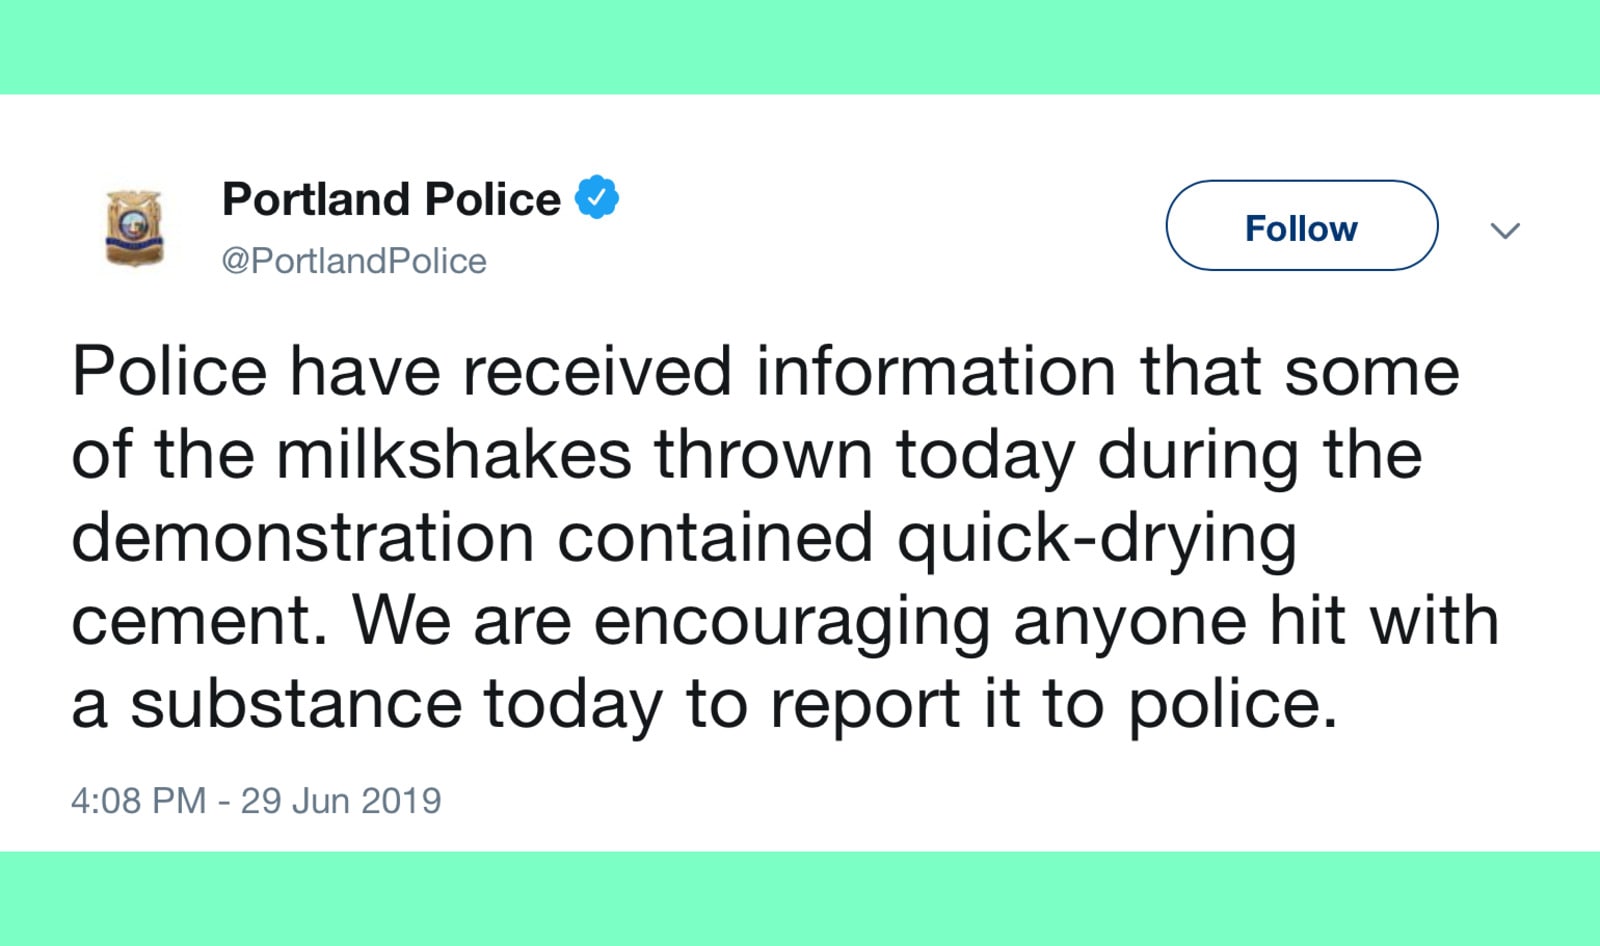 Portland Police Creates Panic by Claiming Vegan Milkshakes Contain Cement&nbsp;